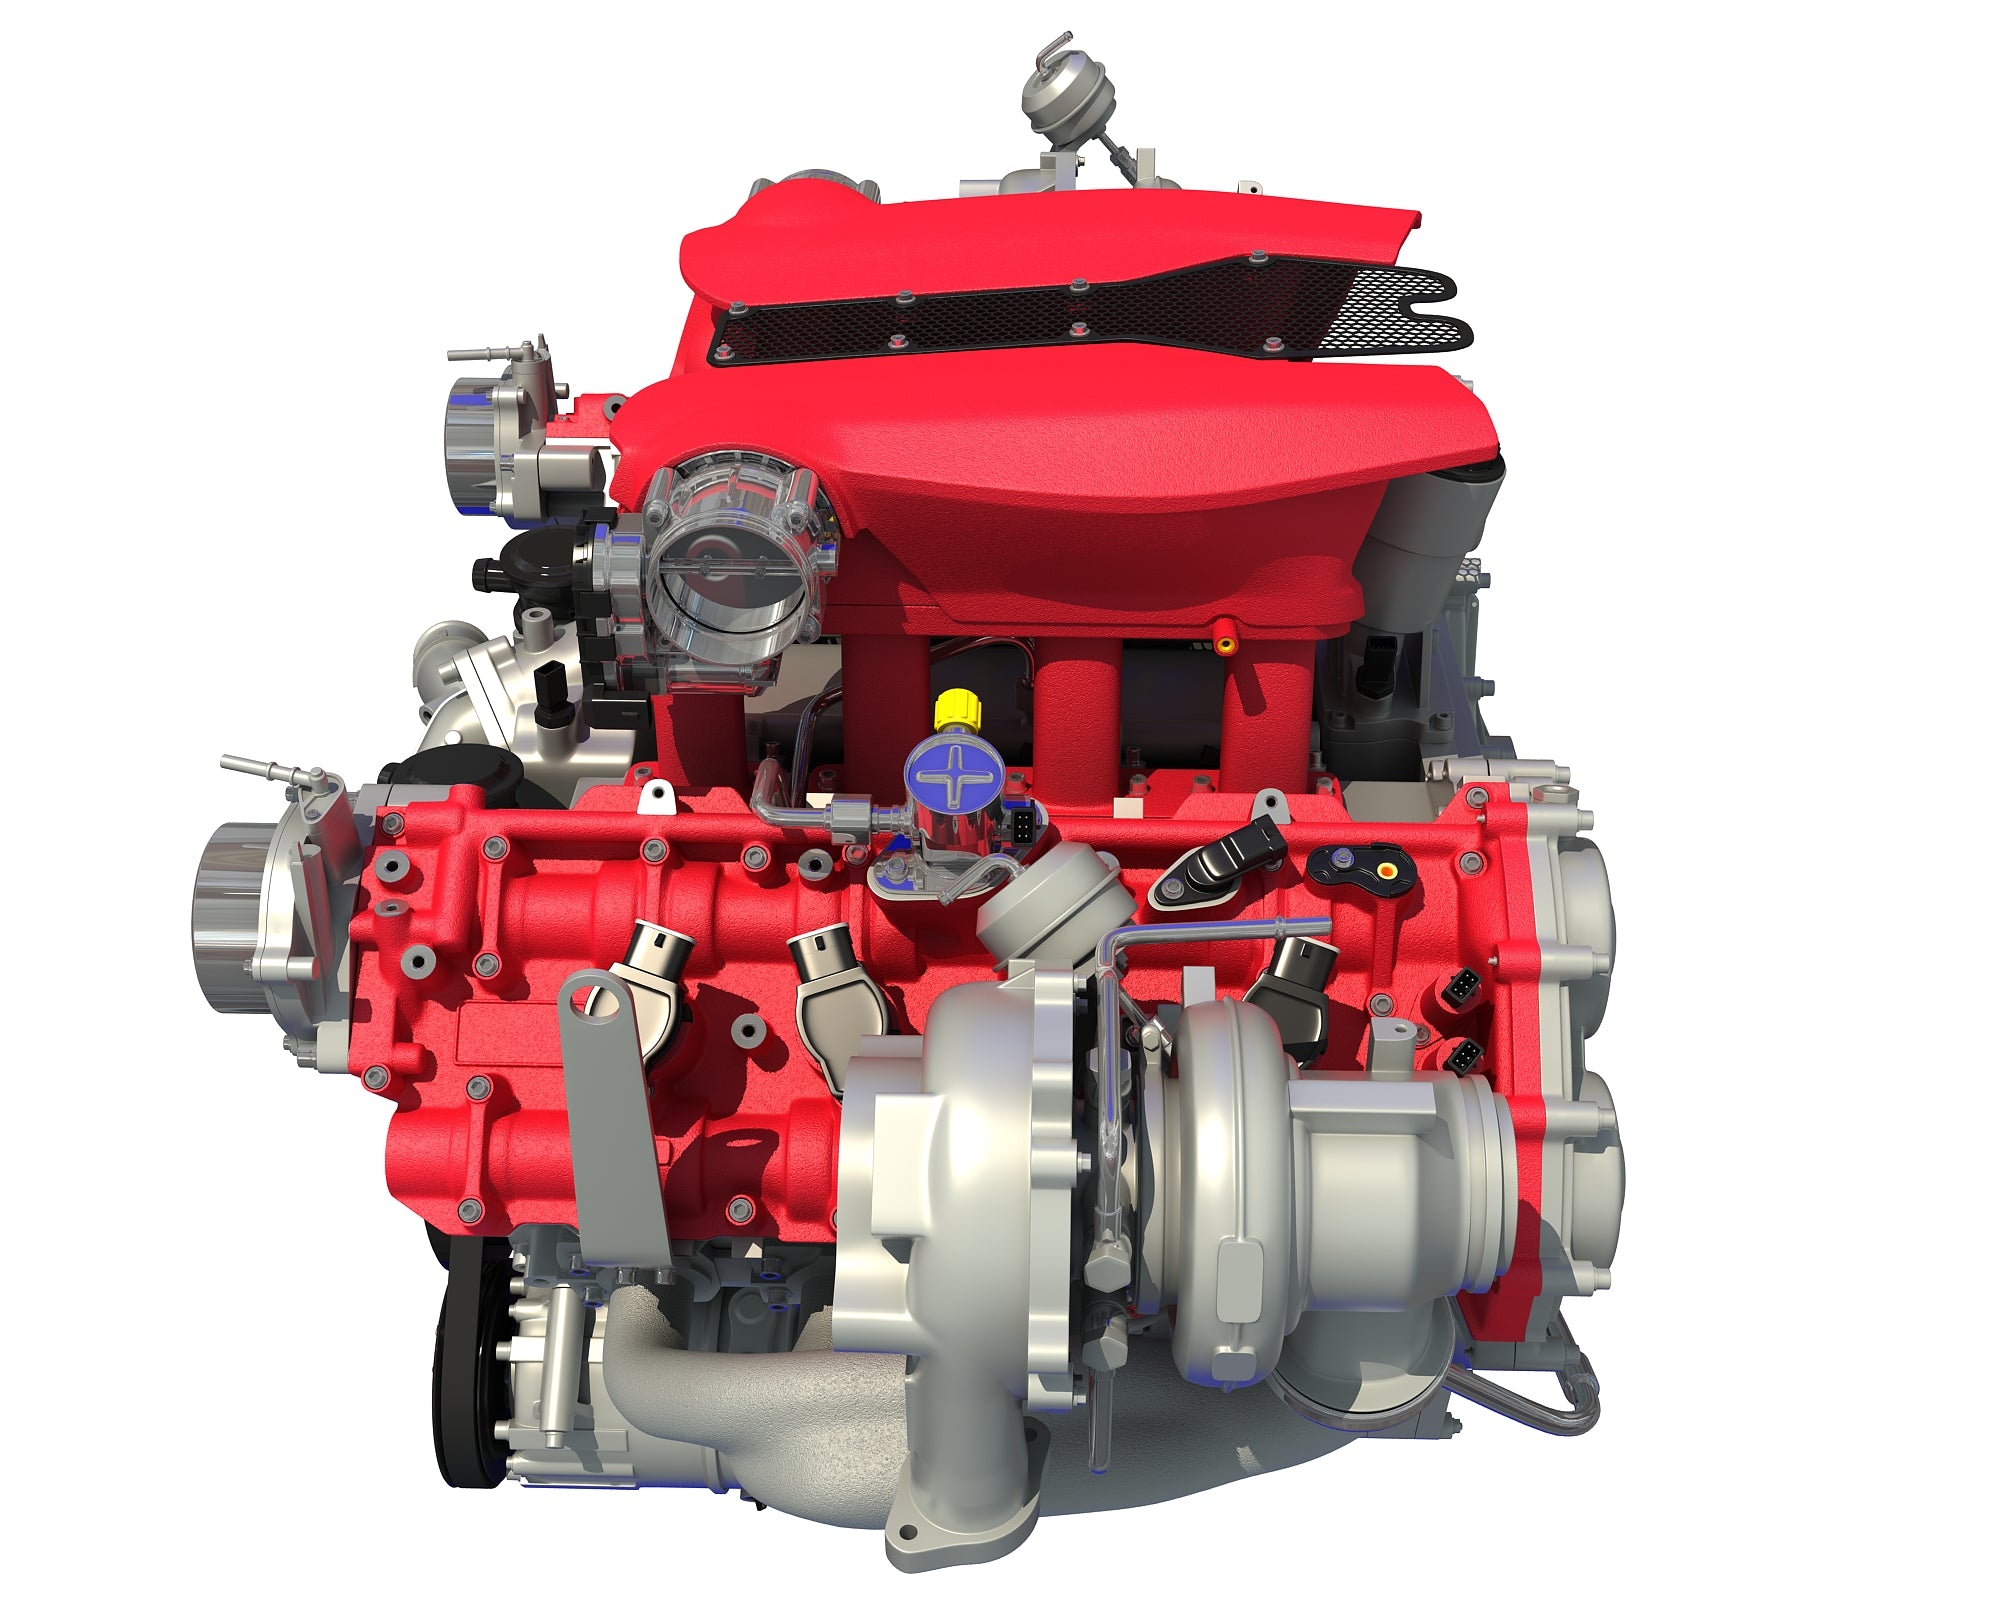 Ferrari 488 GTB Twin Turbocharged V8 Engine